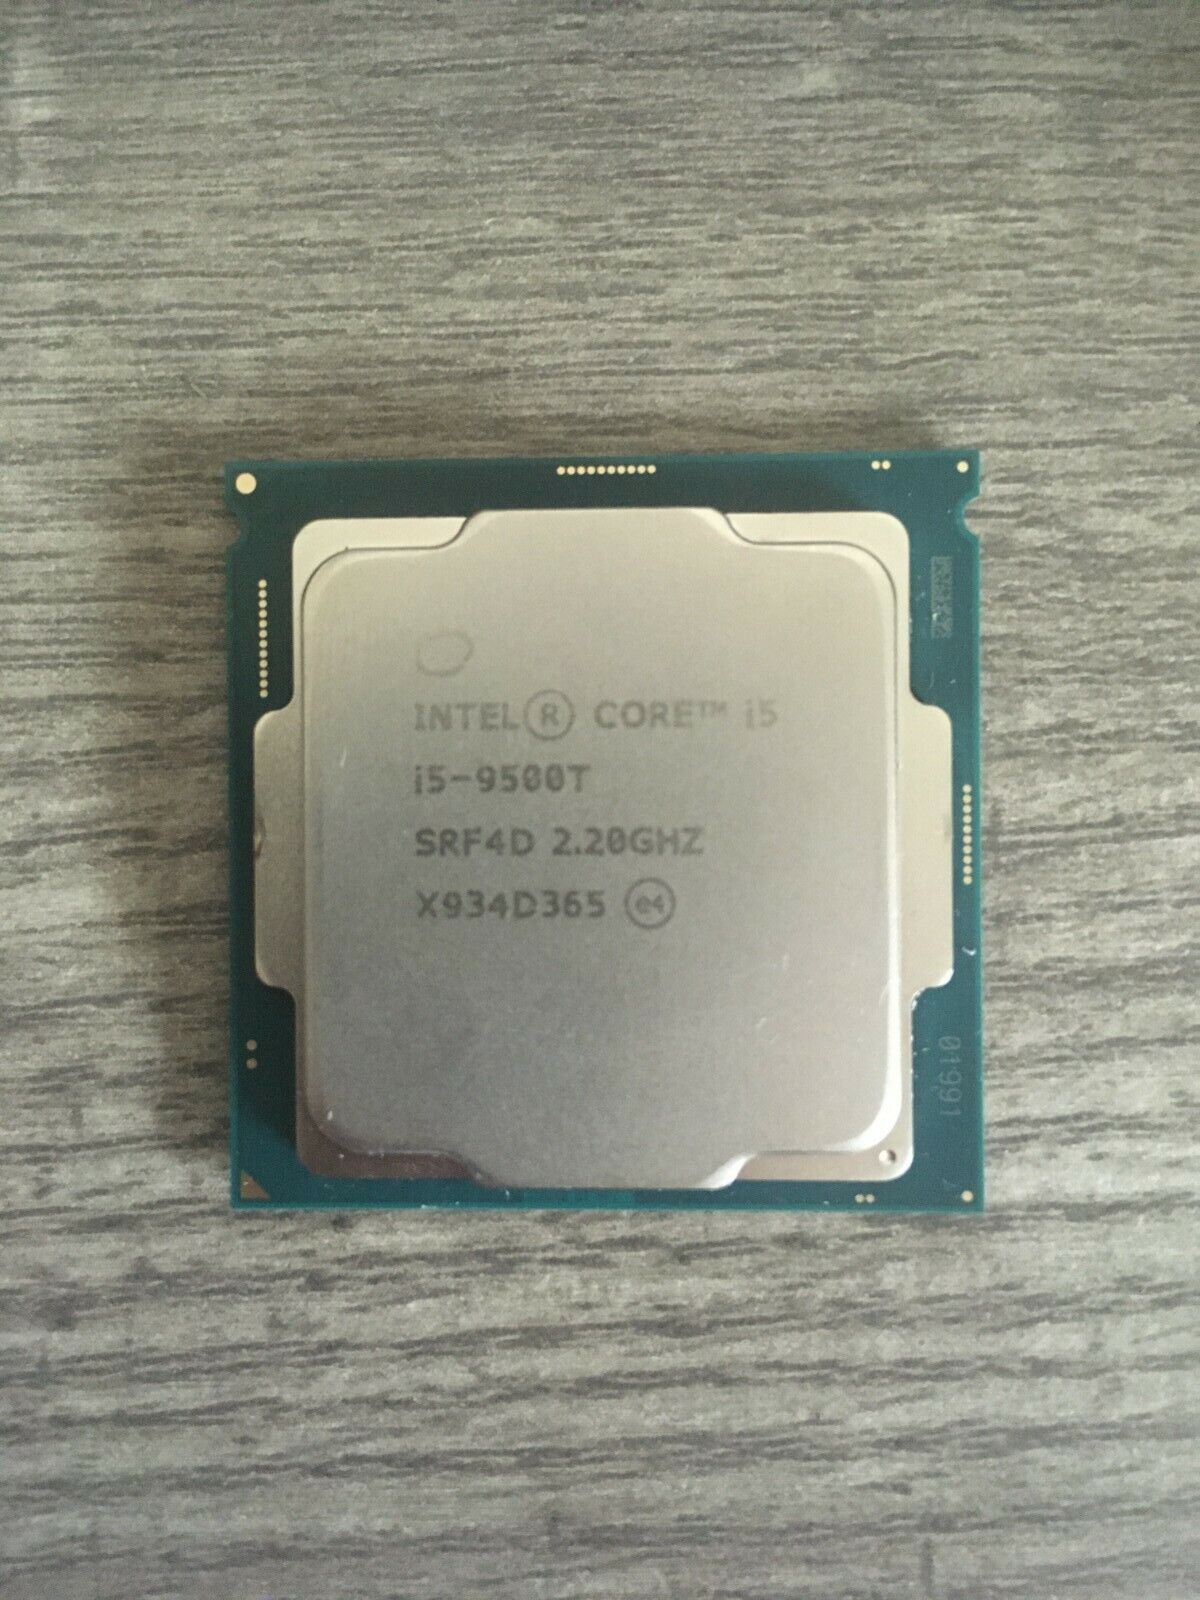 Intel Core i5-9500t 2.2ghz Processor (SRF4D)